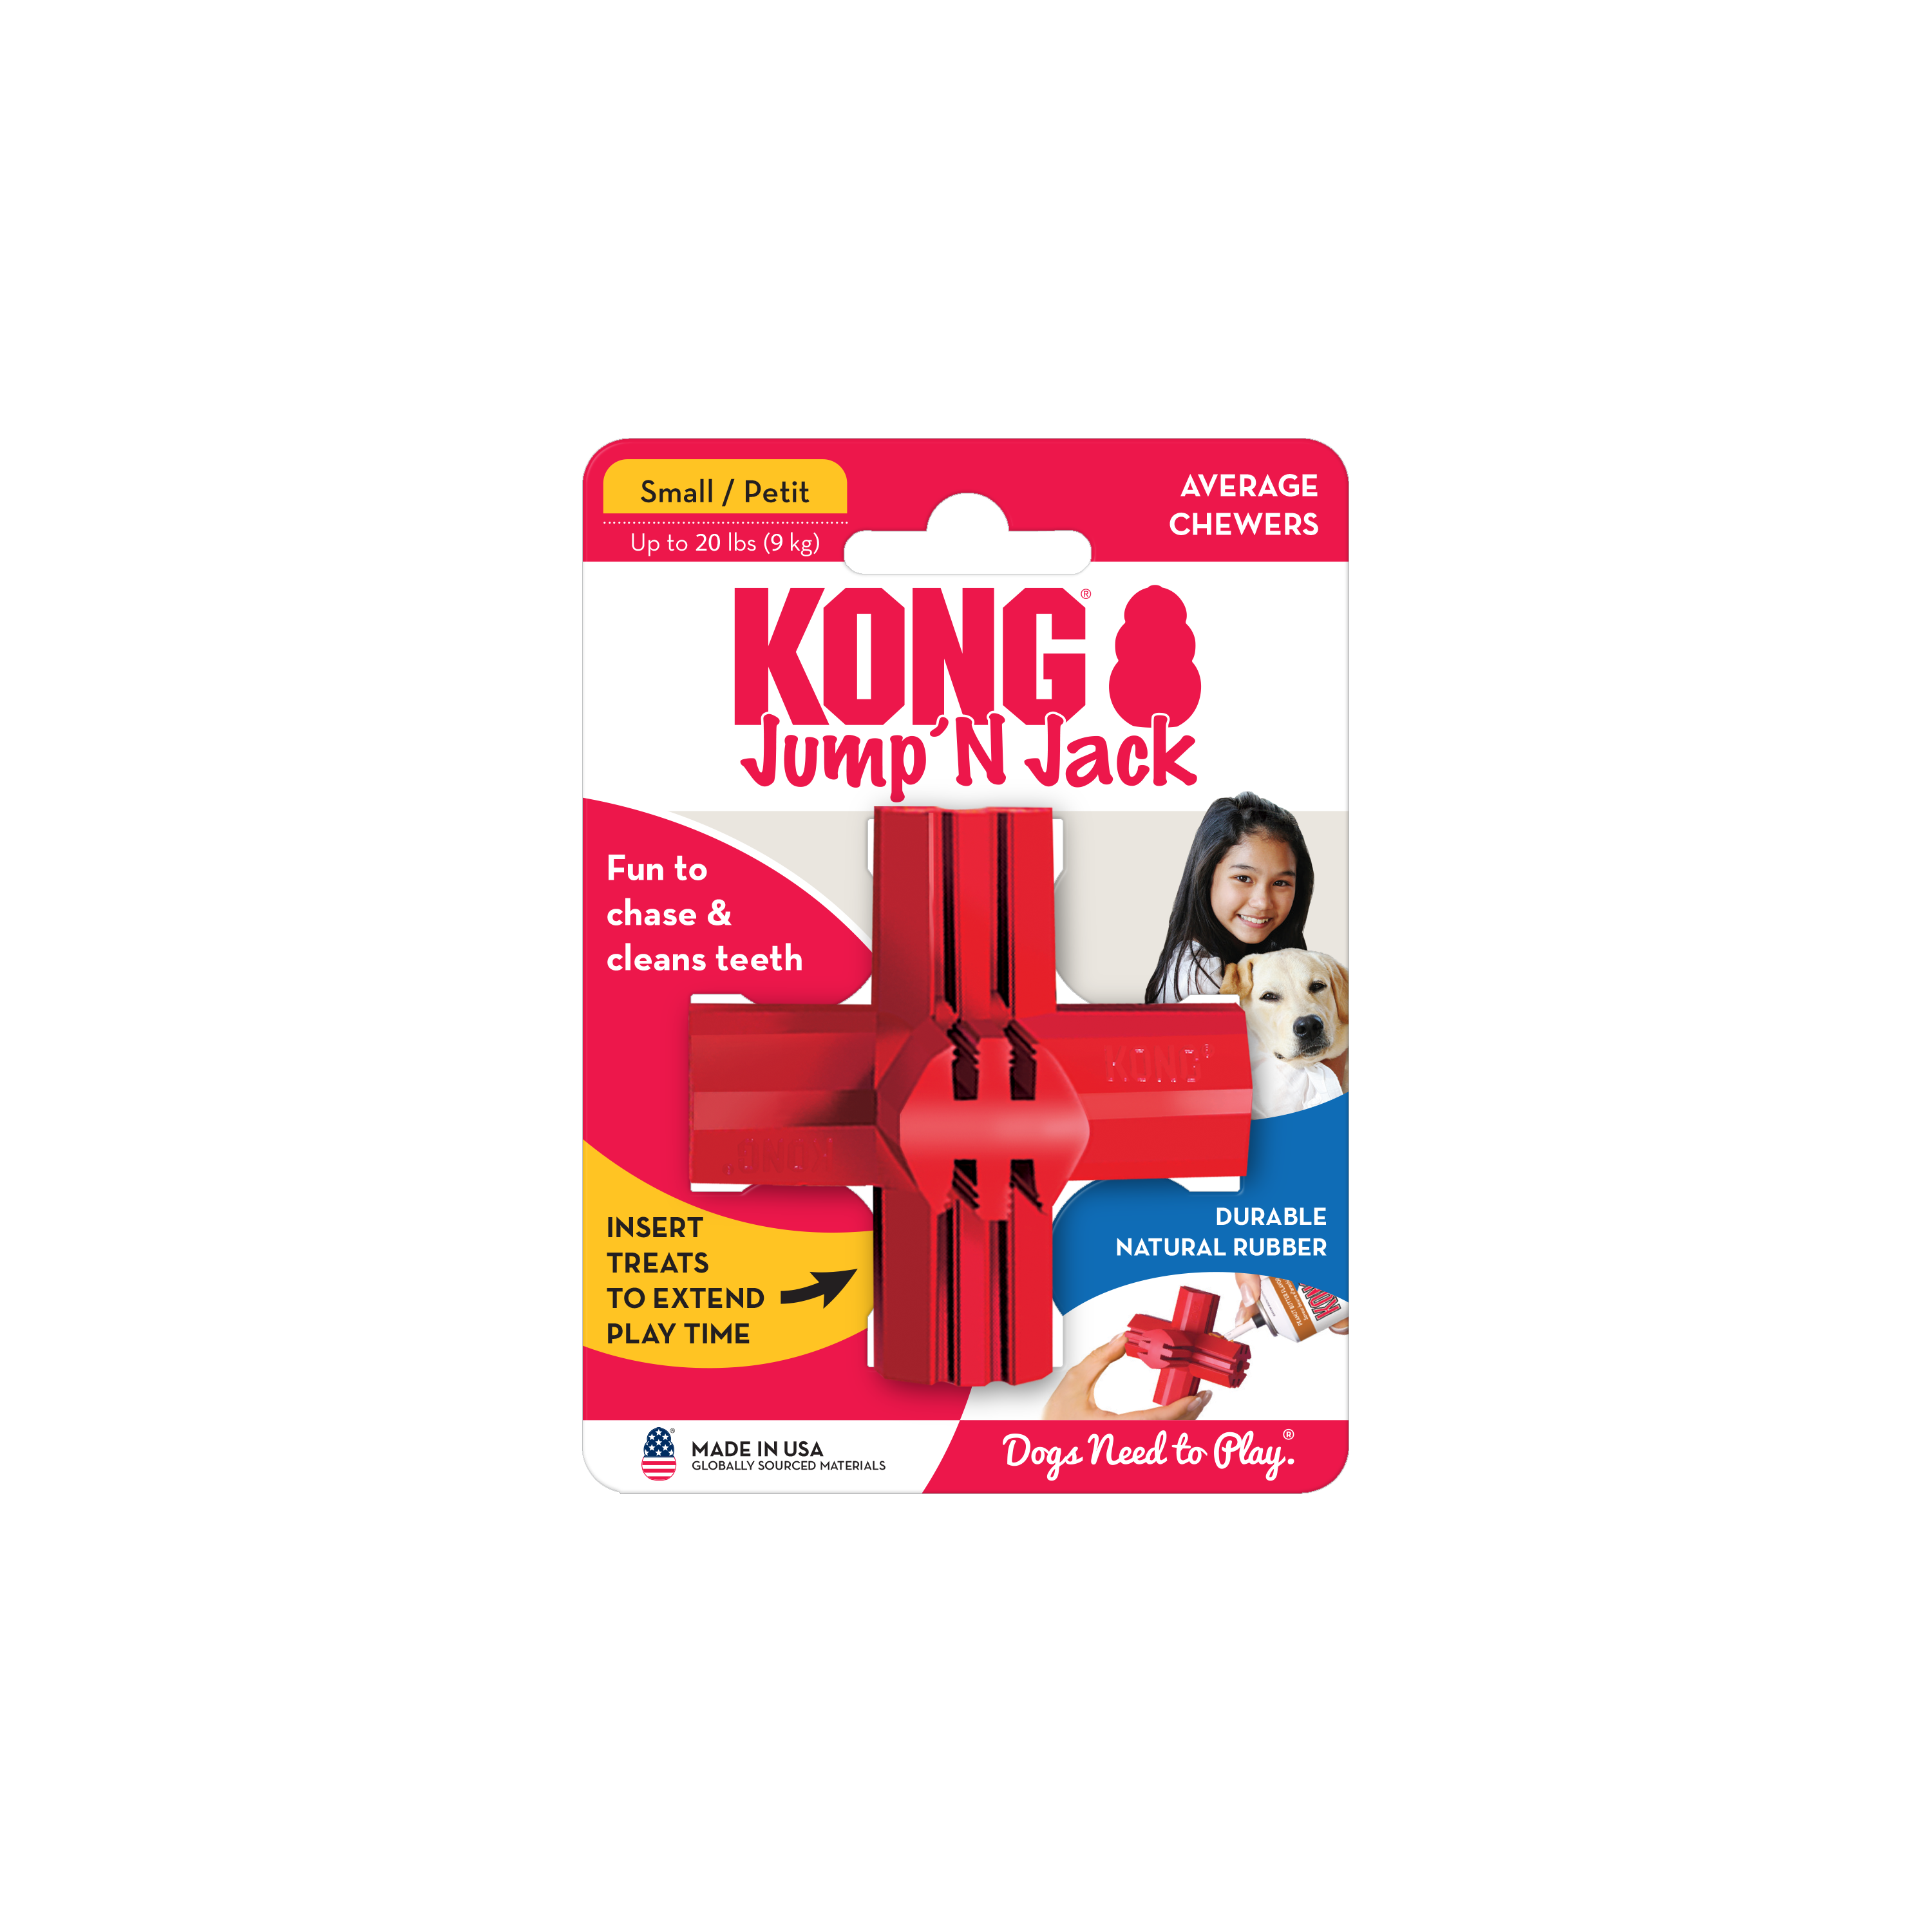 KONG Jump'N Jack onpack product image